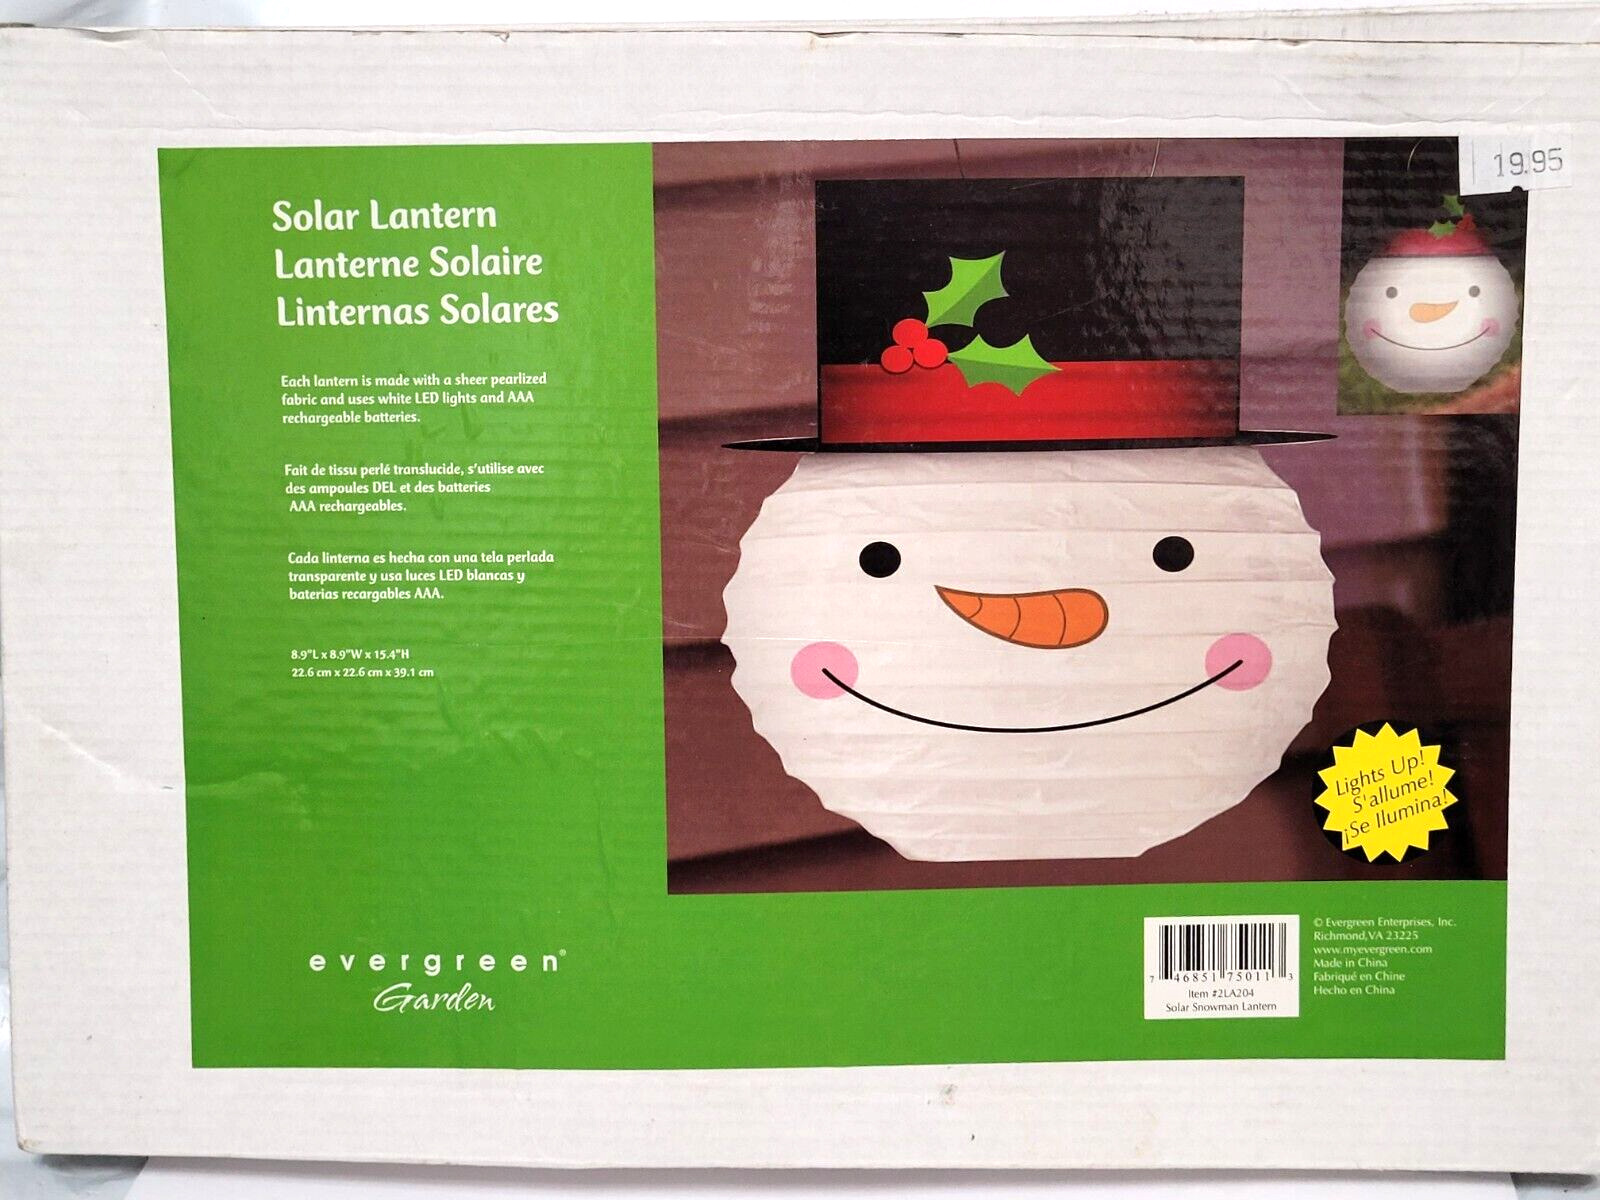 Evergreen Garden Solar Snowman Lantern, New in Box 